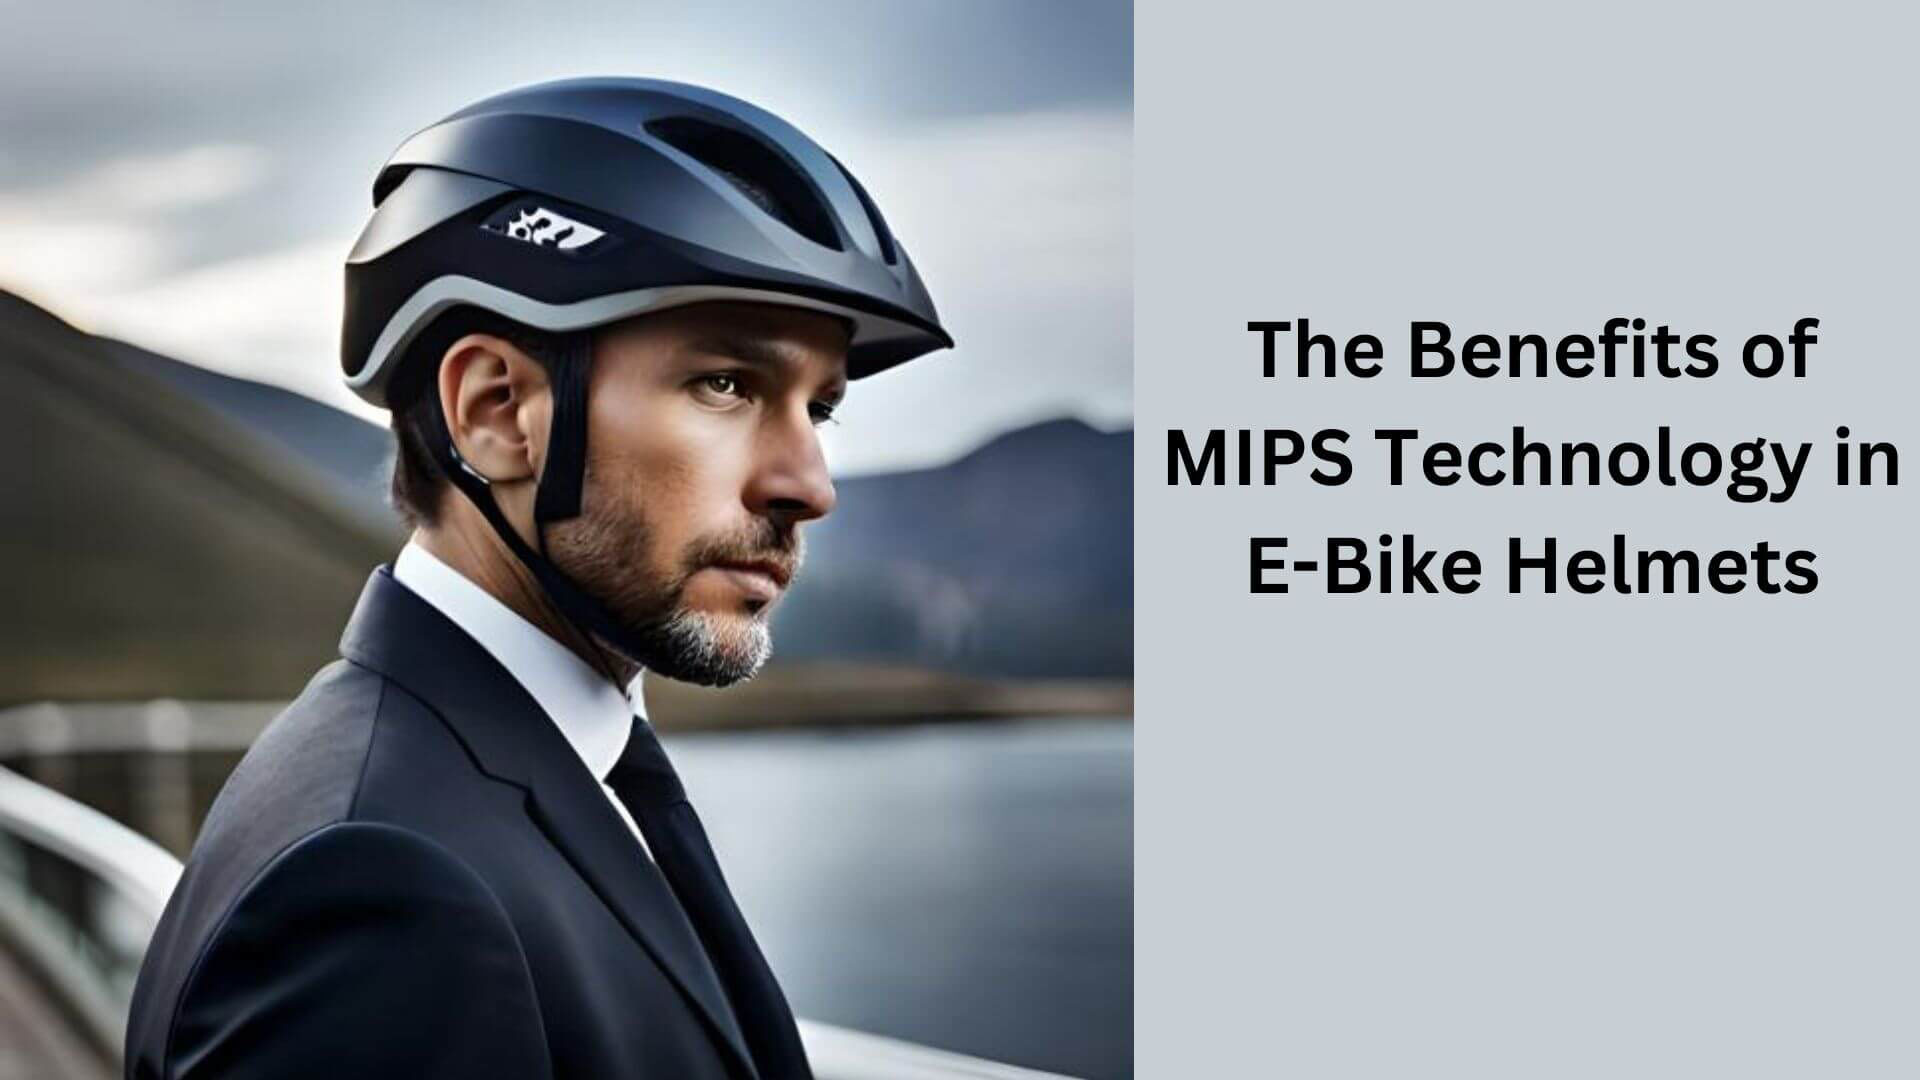 The Benefits of MIPS Technology in E-Bike Helmets